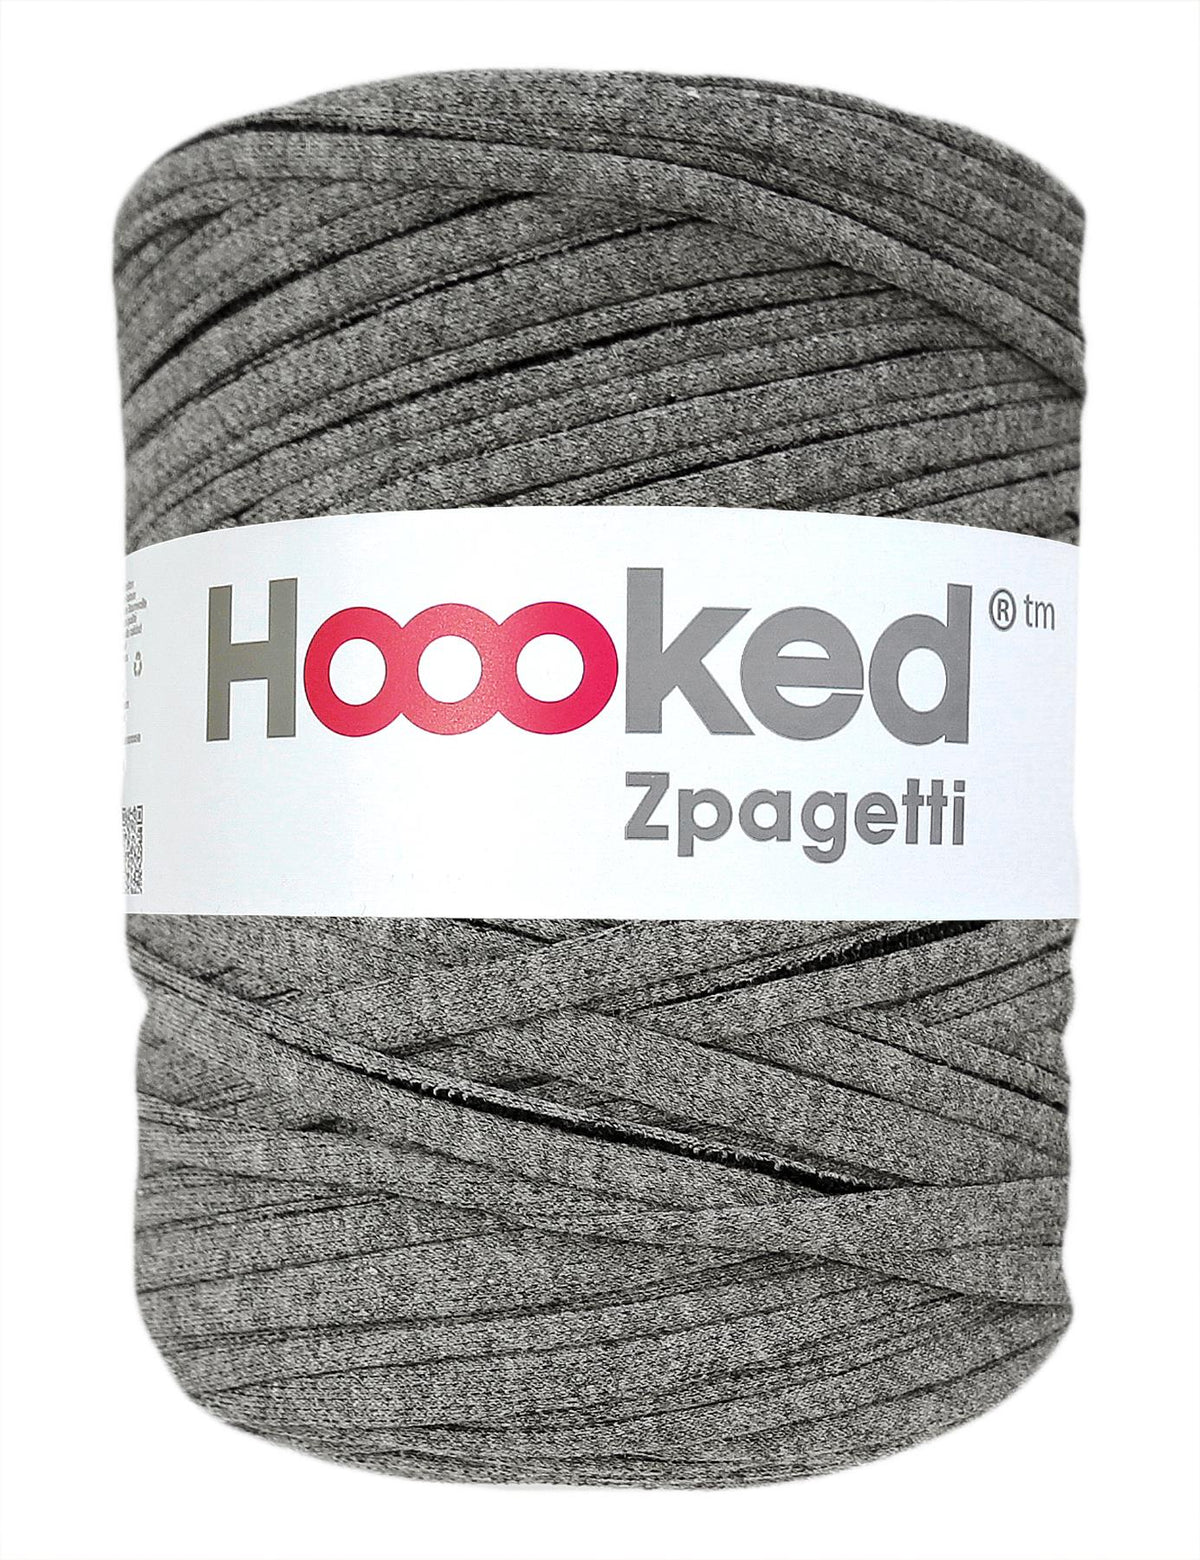 T-Shirt Yarn Fettuccini Zpagetti Ball, 3-5 mm Tshirt Yarn for Crochet  Knitting, Mask Ear Ties, T Yarn Organic Cotton, Macrame T-Yarn, Jersey Yarn  